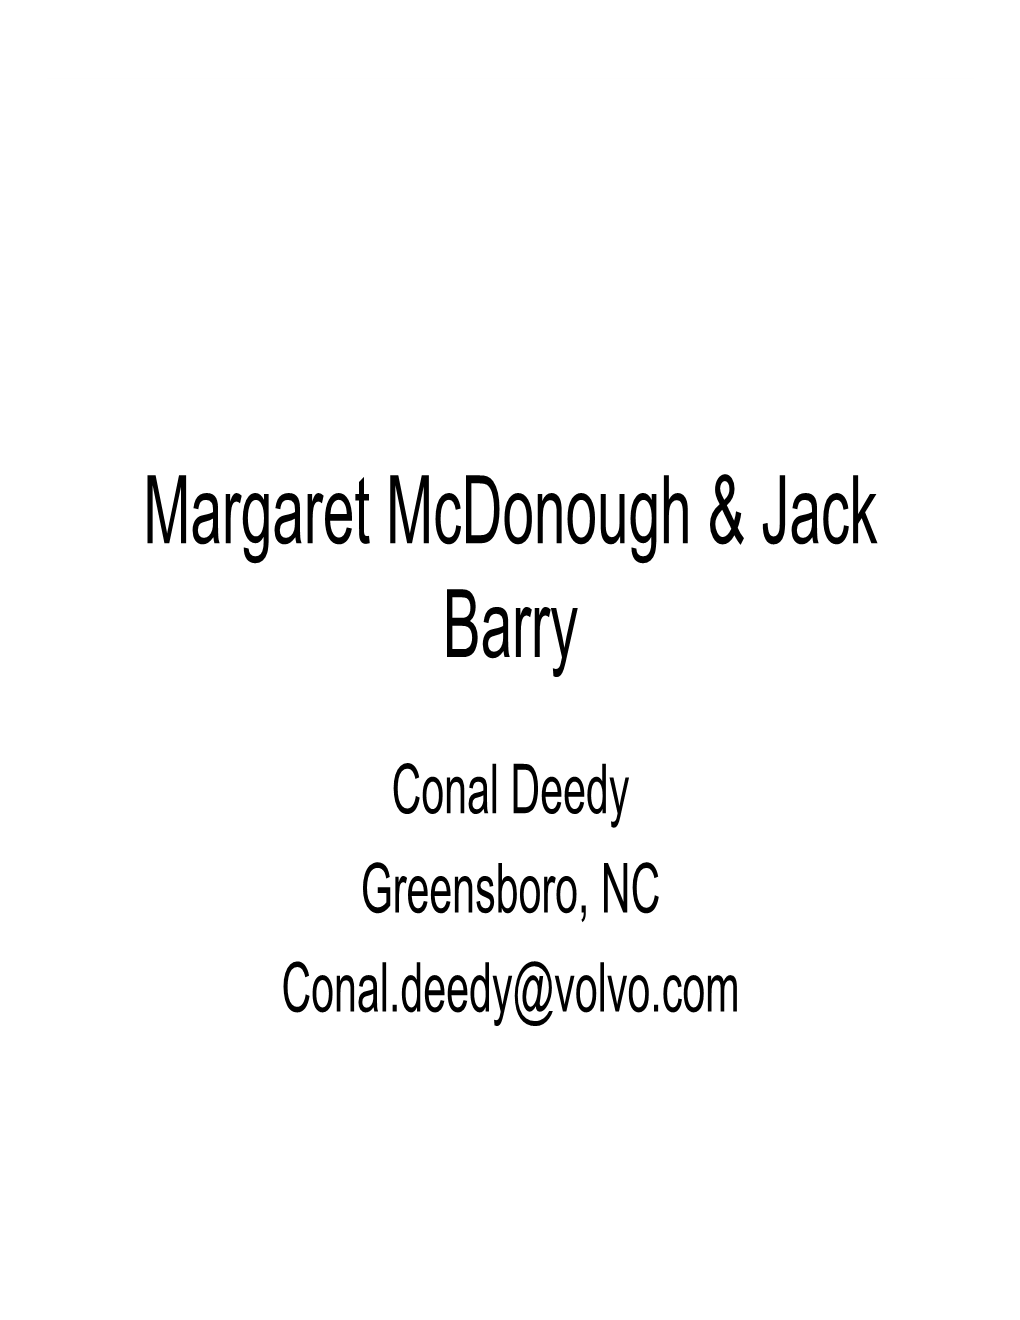 Margaret Mcdonough & Jack Barry